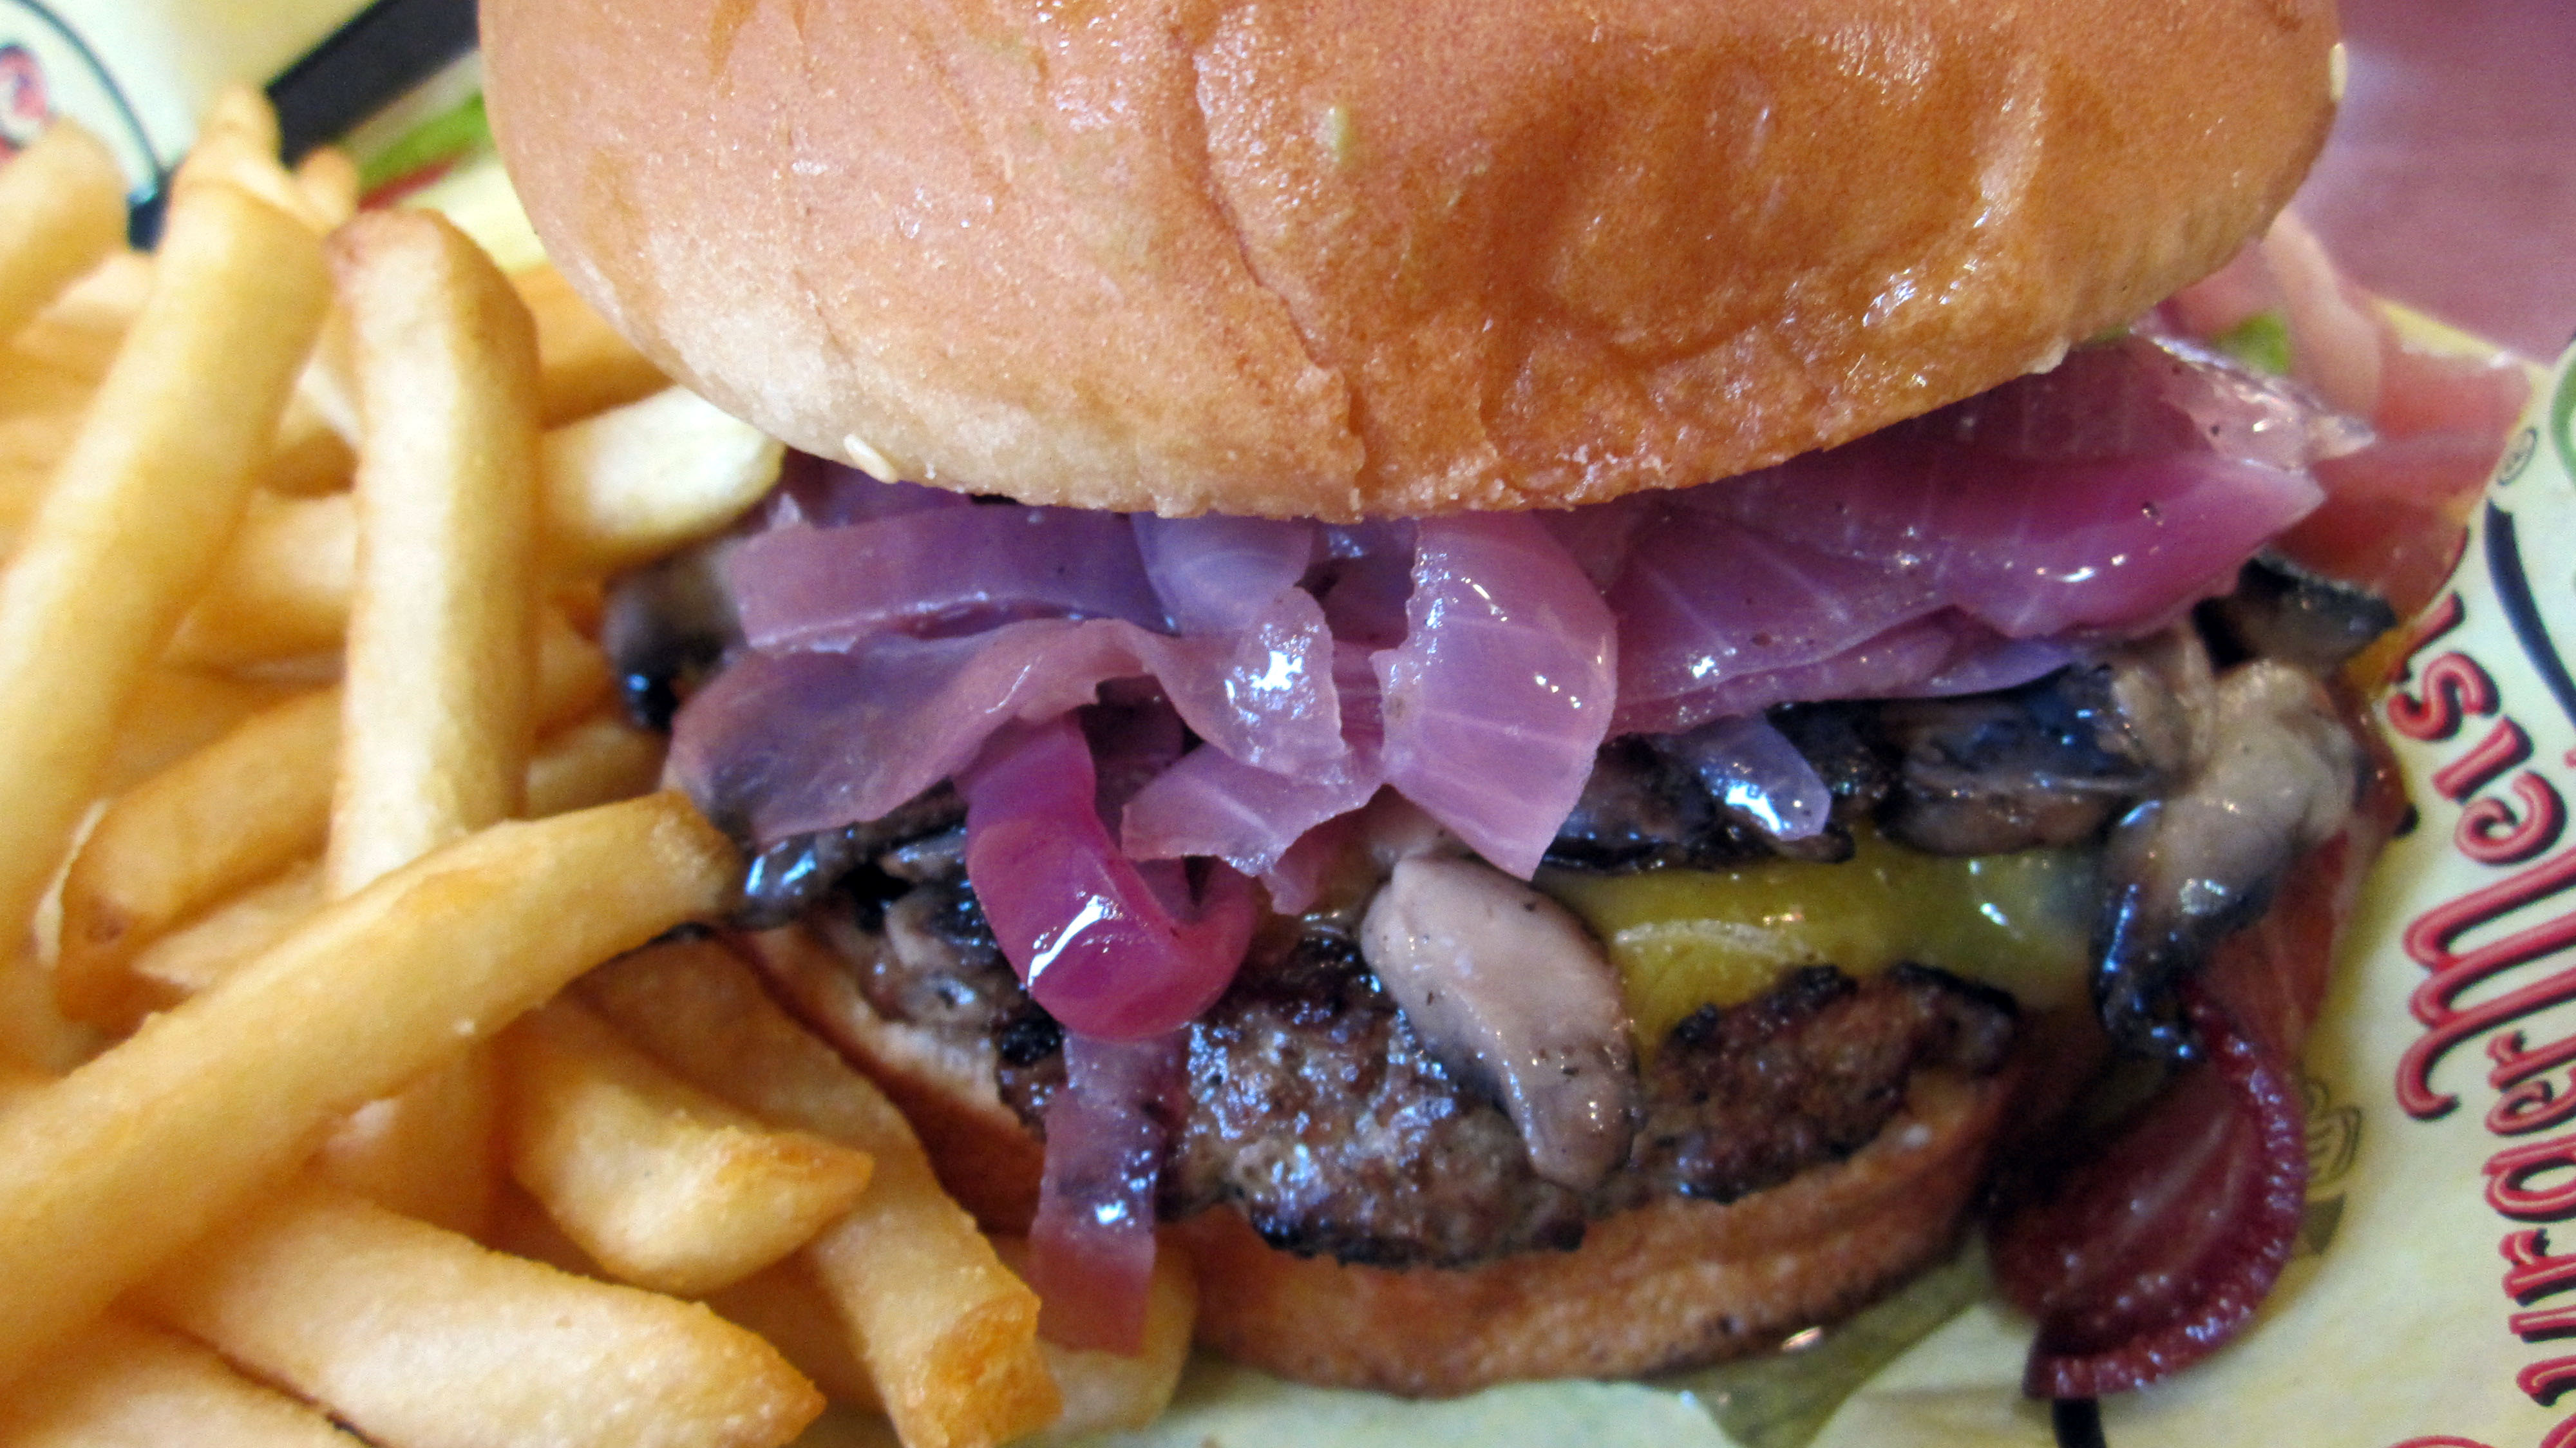 Burgermeister - My Best Hangover Meal Yet